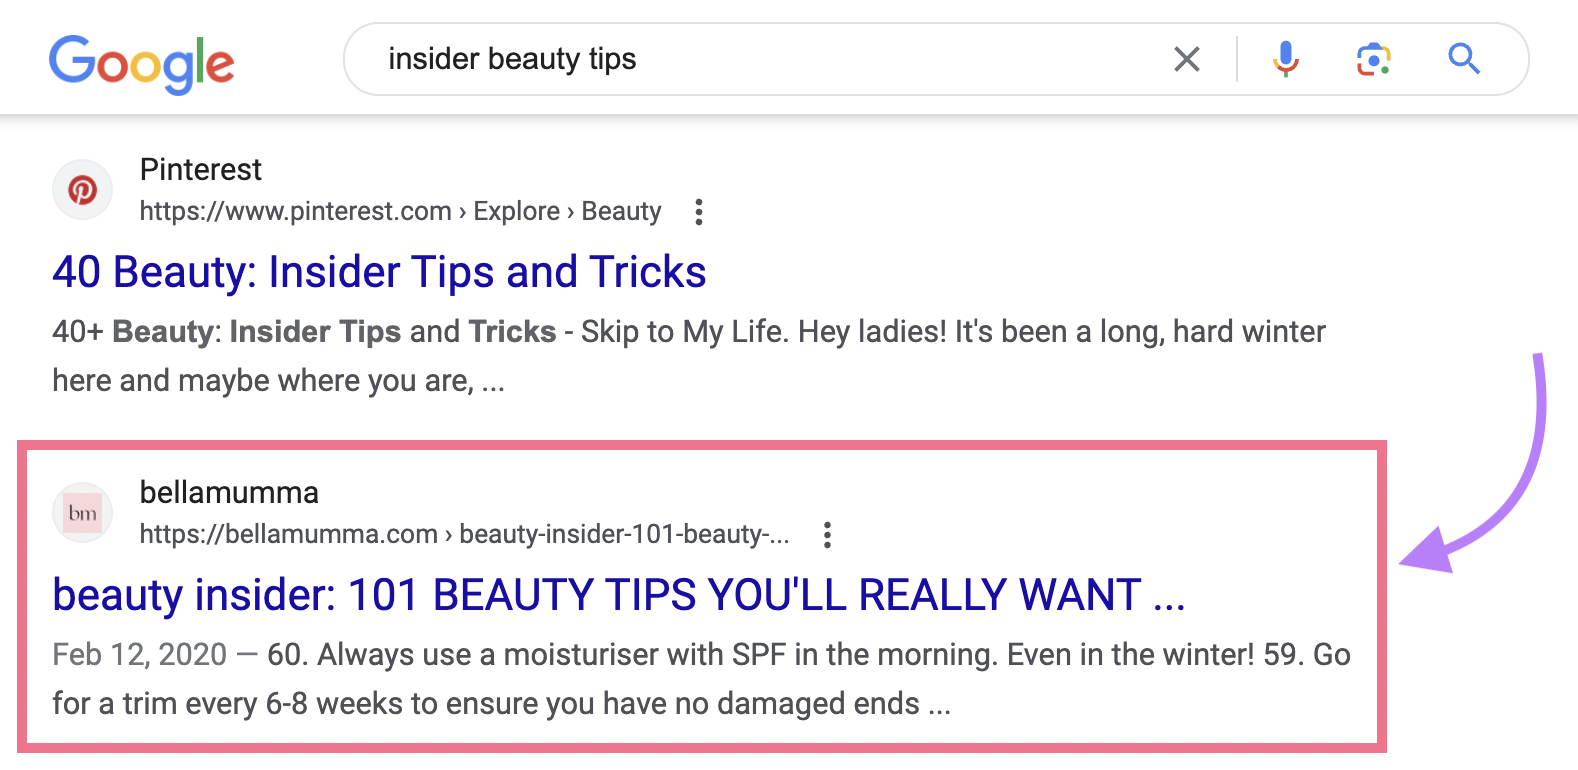 “insider beauty tips” on Google SERP